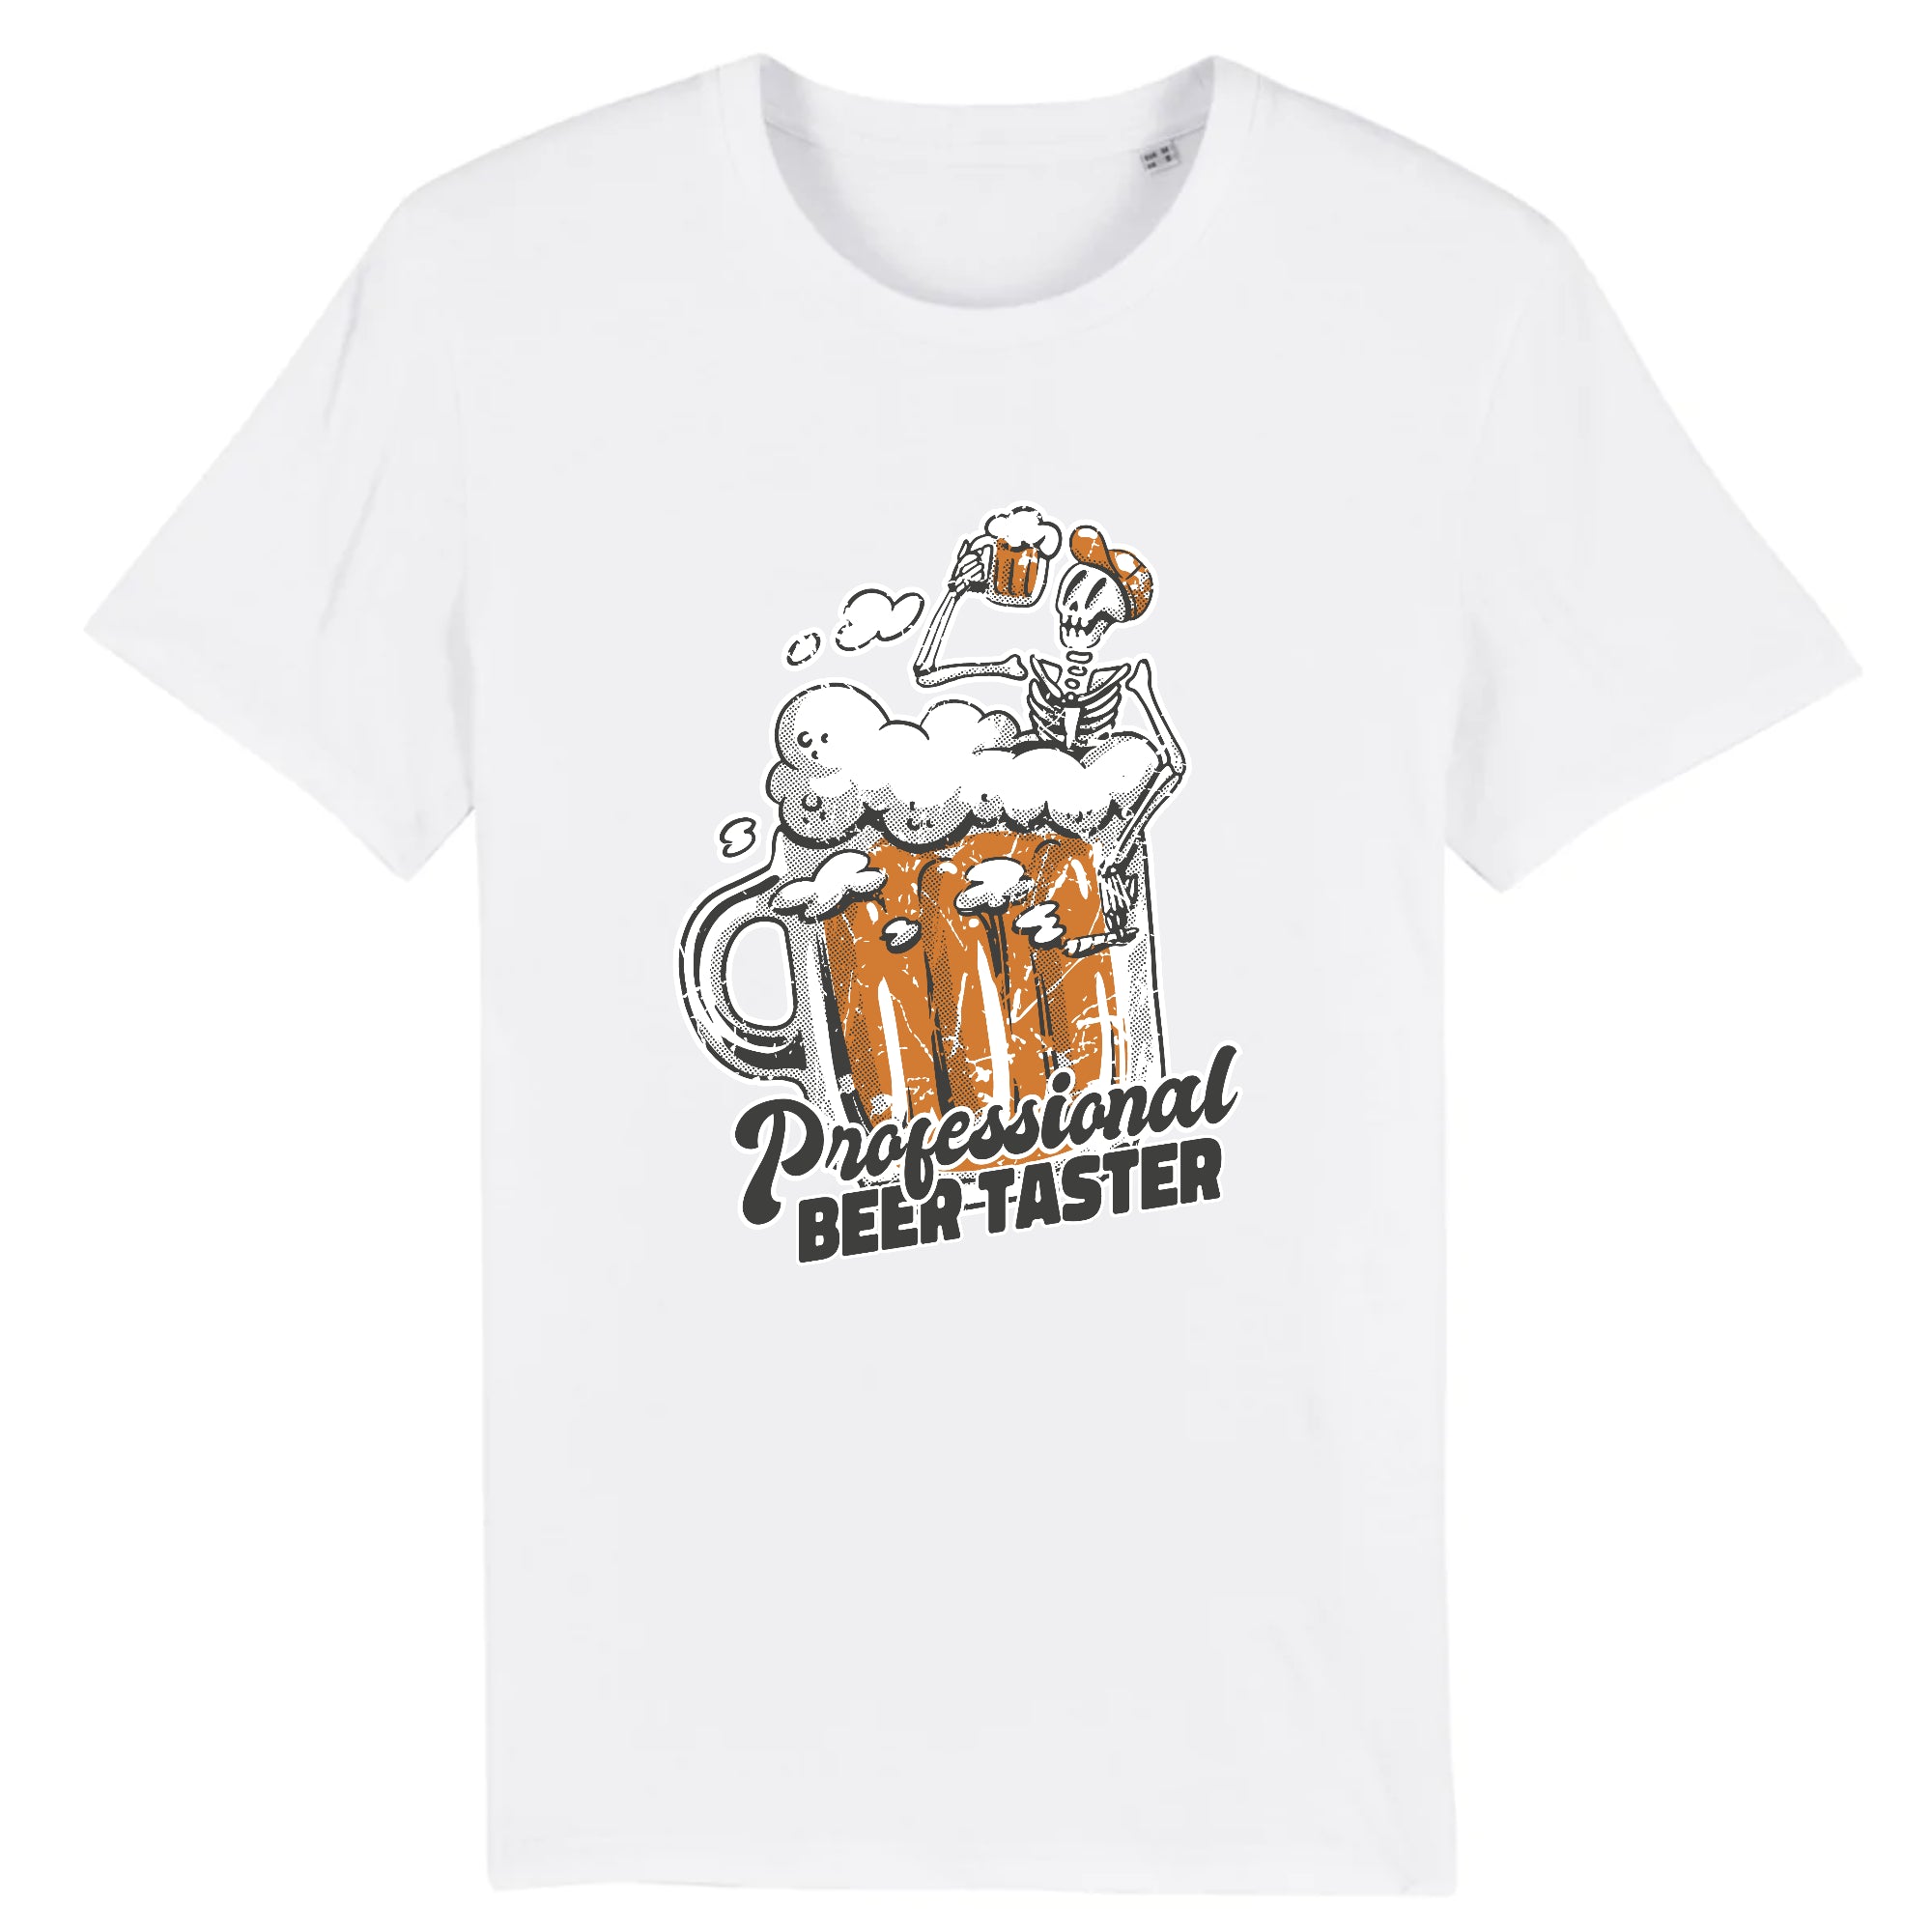 T-Shirt - "Professional Beer taster"